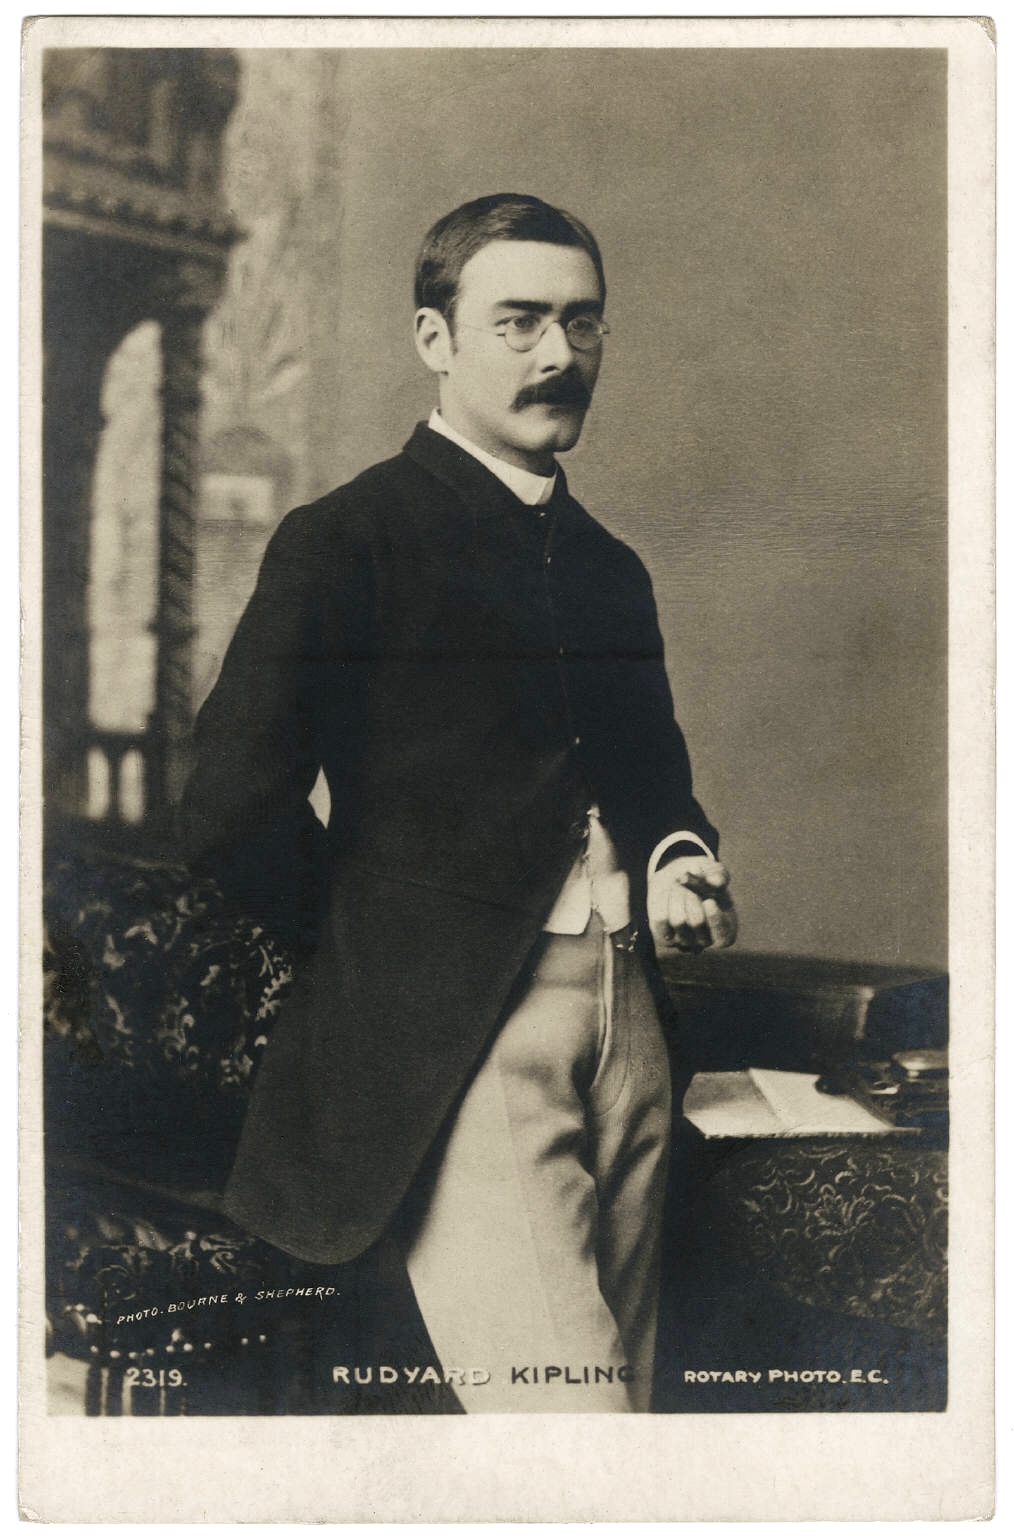 Bourne & Shepherd's photographic postcard portrait of Rudyard Kipling (courtesy of the Beinecke Rare Book & Manuscript Library, Yale University via Wikipedia Commons)